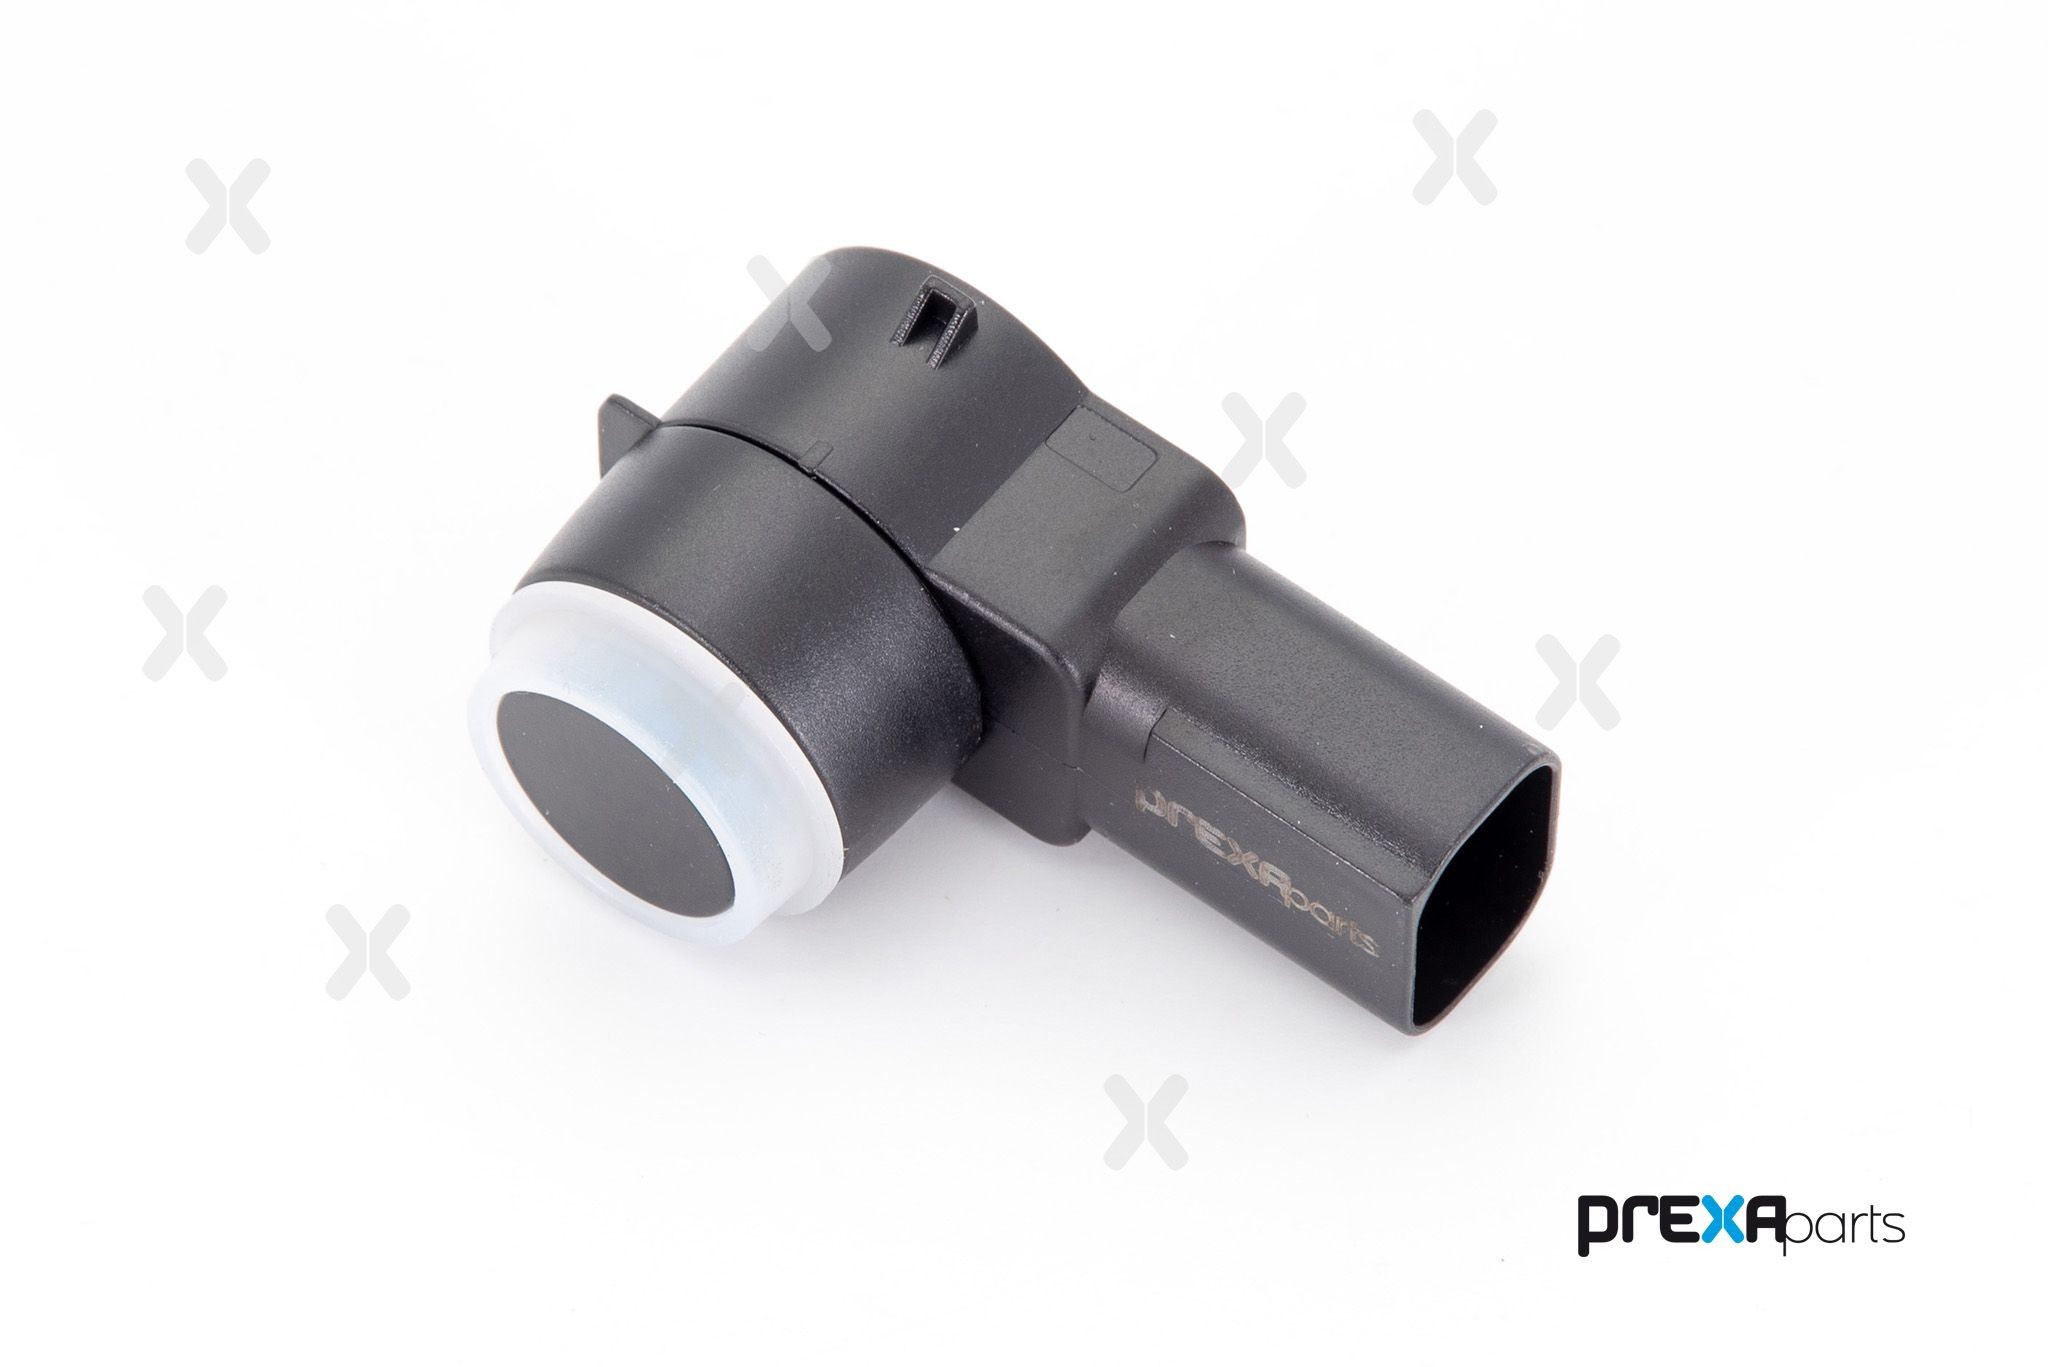 PREXAparts Reversing sensors P703005 buy